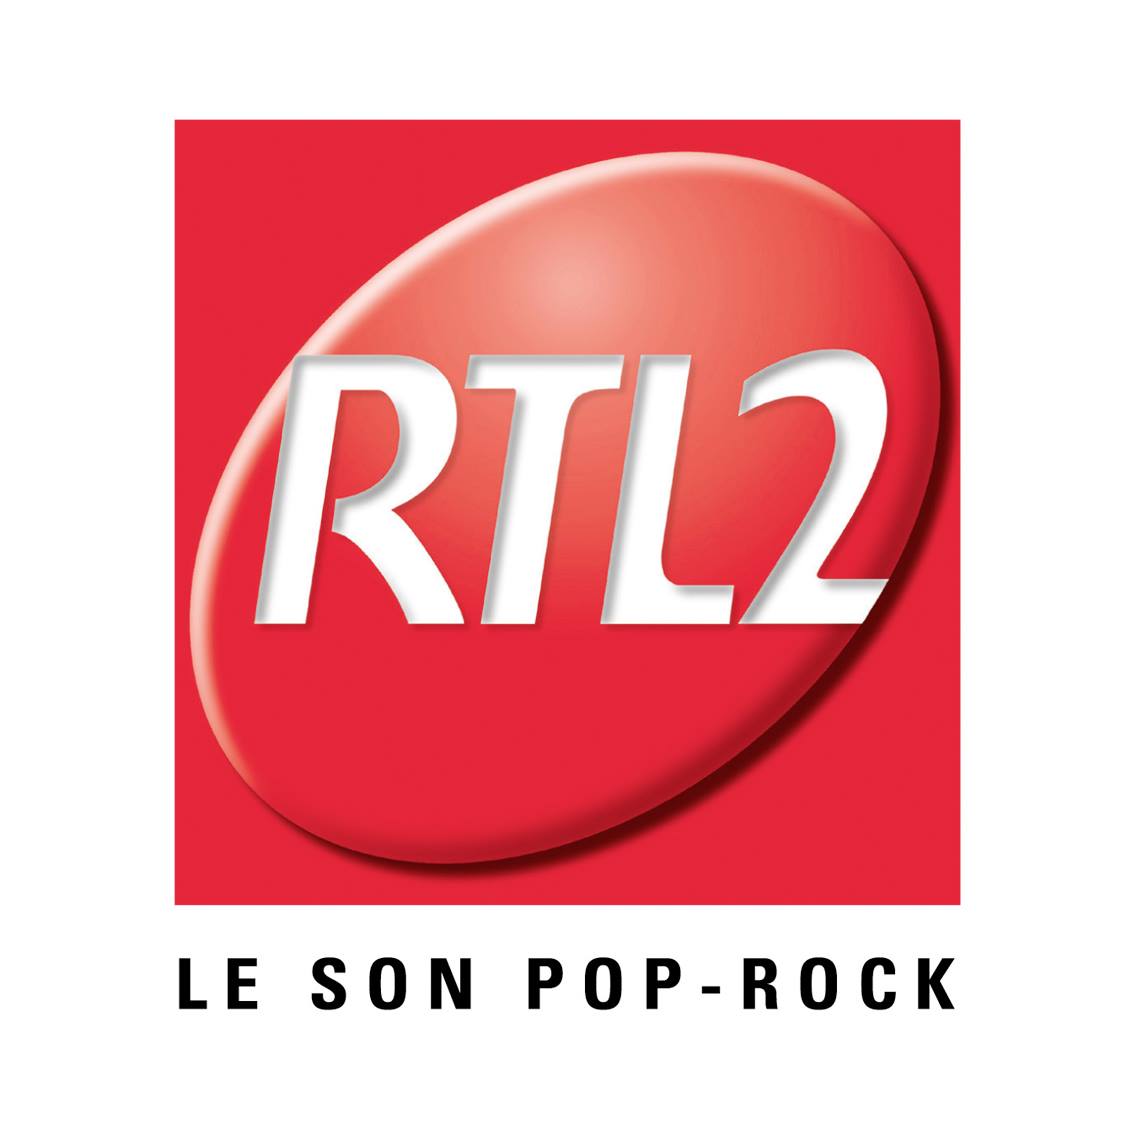 RTL2 : plus forte progression annuelle des radios musicales